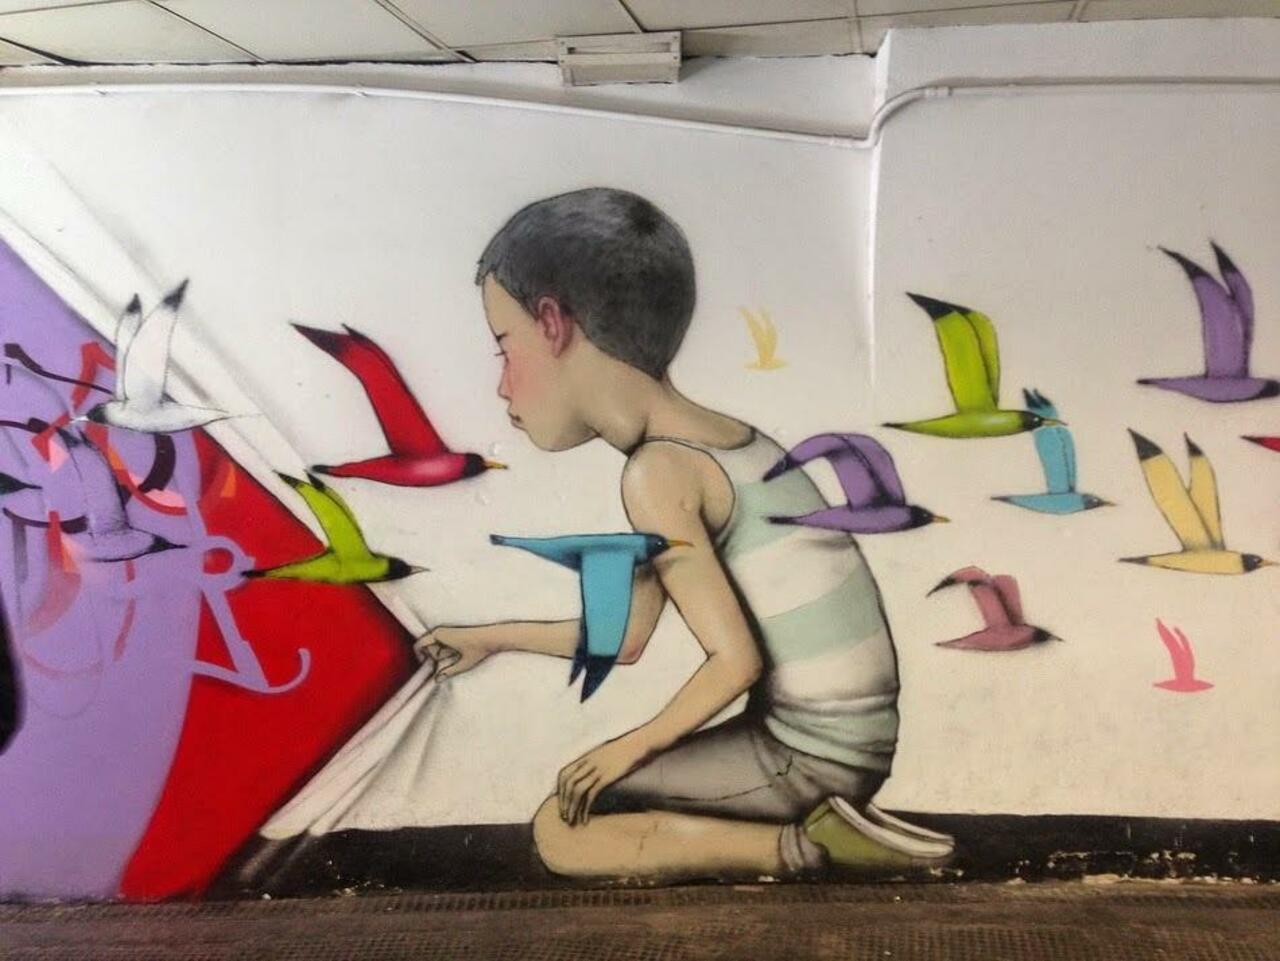 RT @ArtMuse79: Seth Globepainter
#graffiti #streetart #artmuse #گرافیتی http://t.co/OsL0INyMec